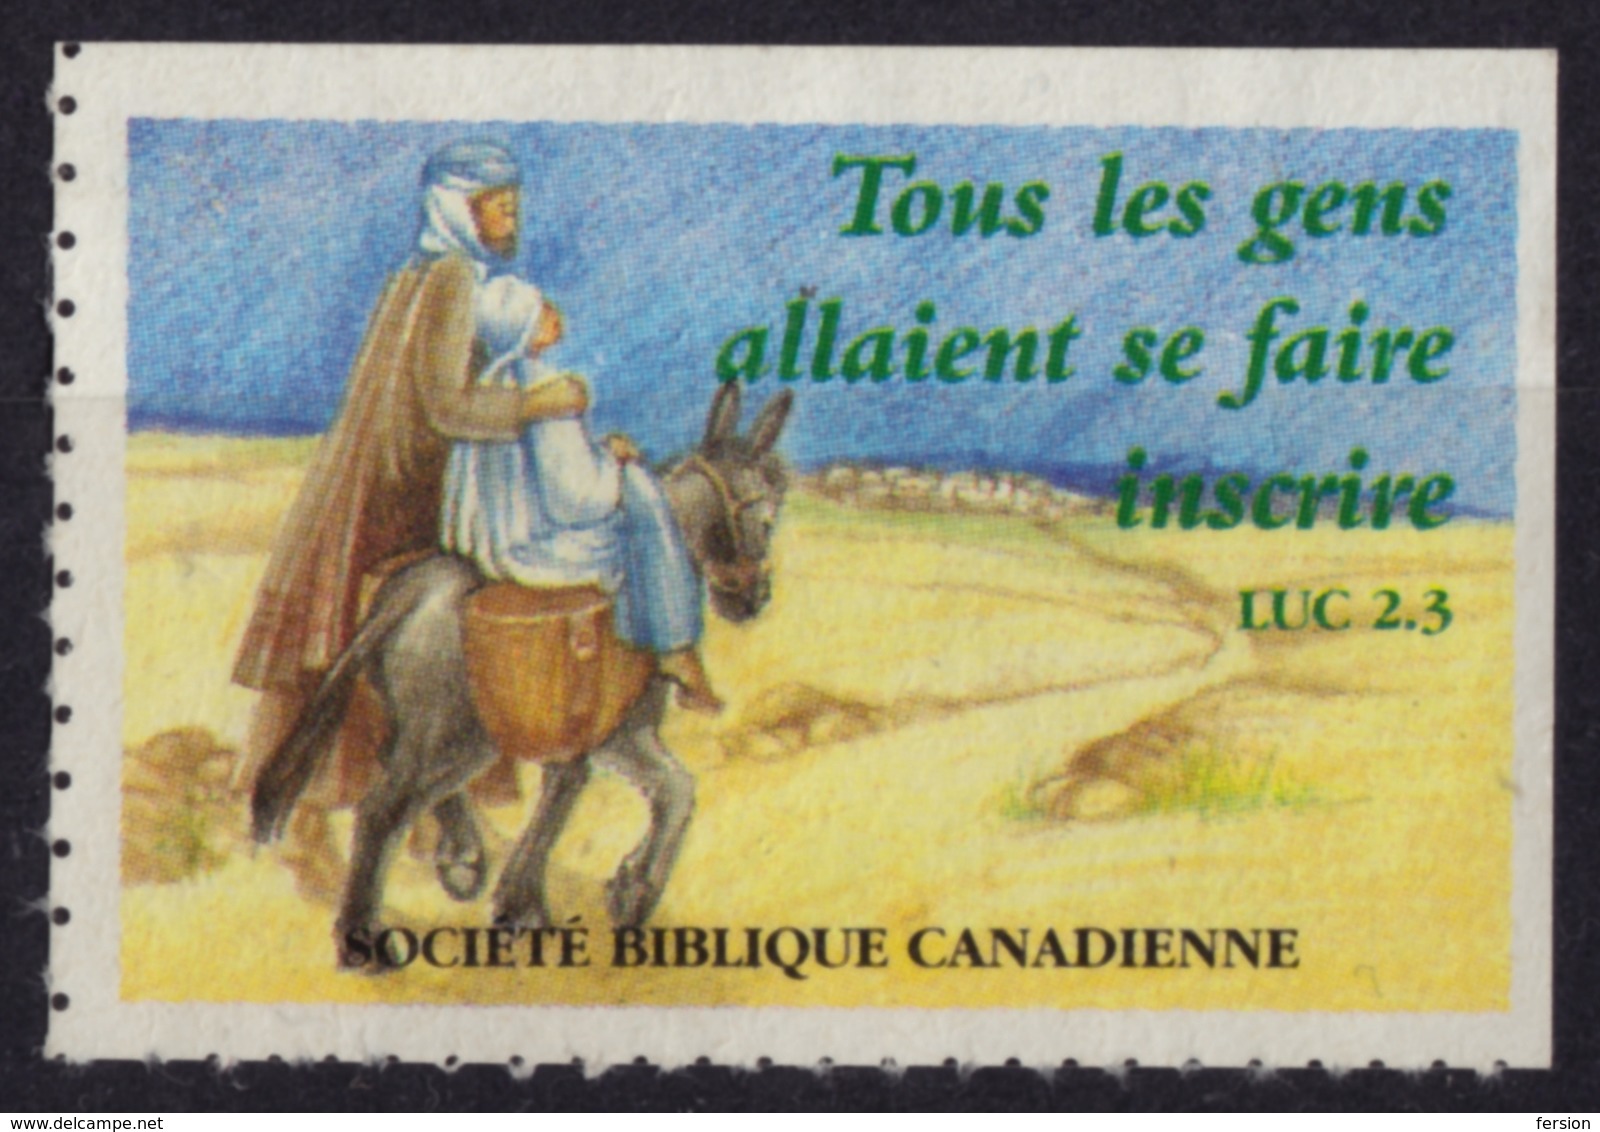 CANADA Bible Society / Christianity - Charity Stamp / Label / Cinderella / Vignette  - Used - Mary Joseph Donkey - Asini